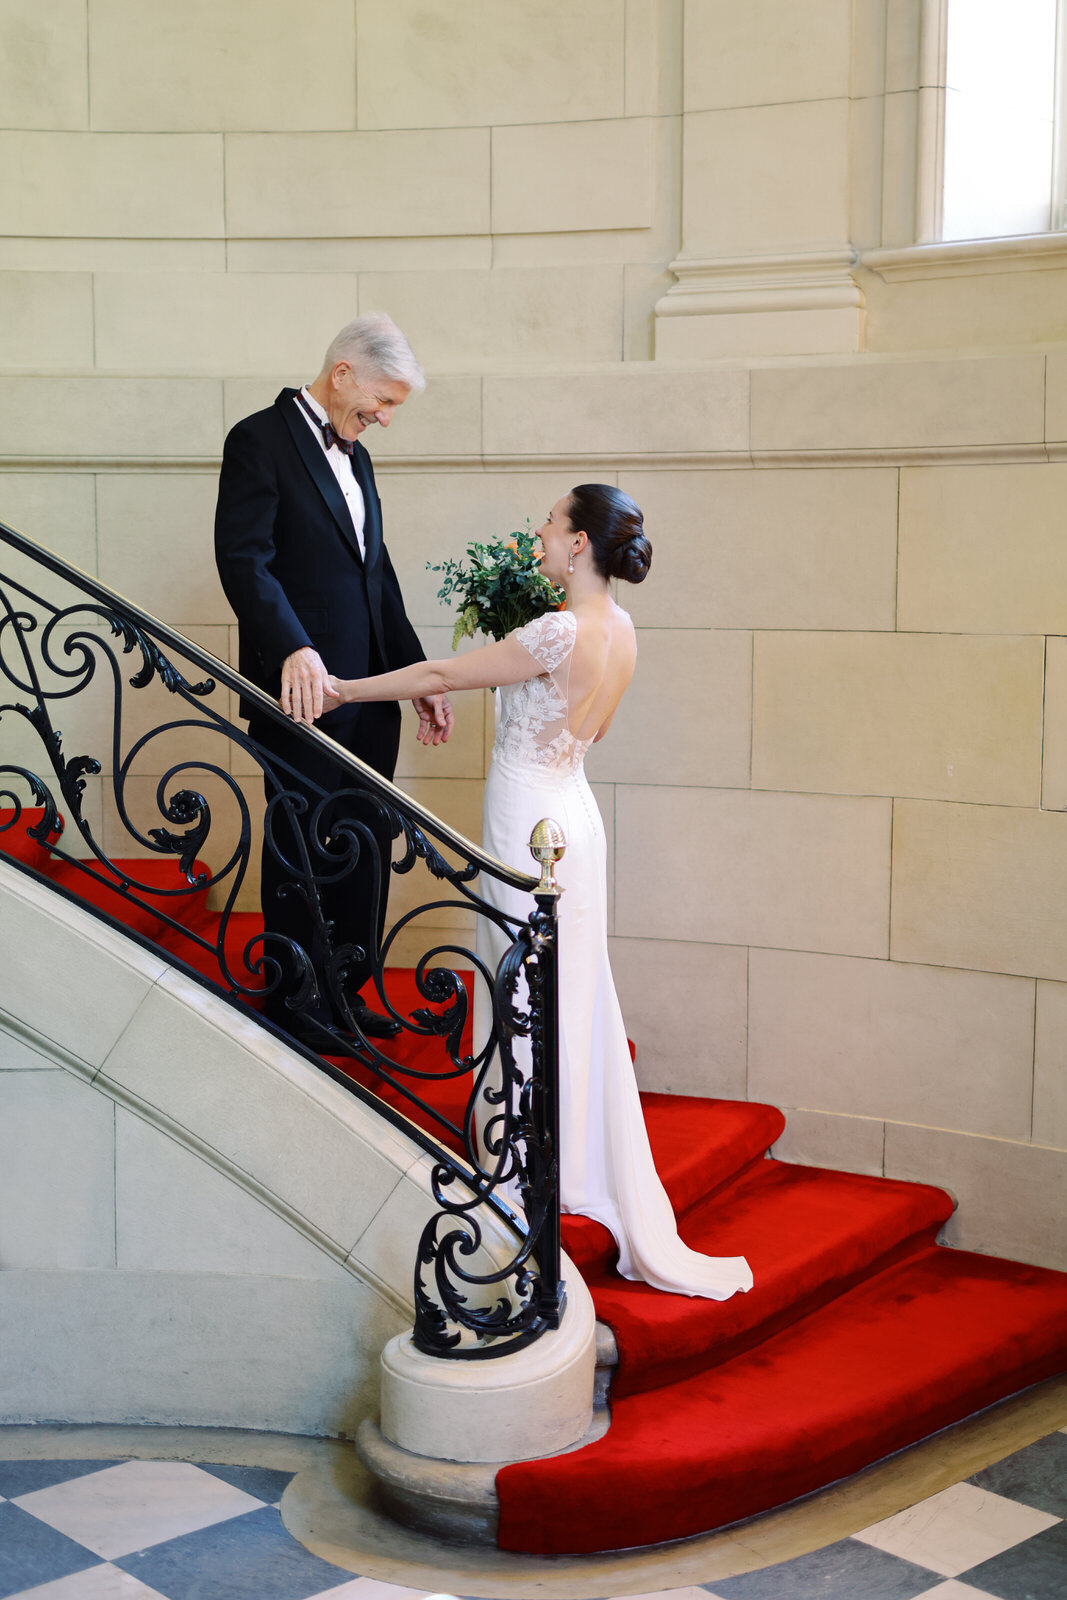 Stylish wedding photography portraits at the European DC Wedding Venue, the Meridian House.